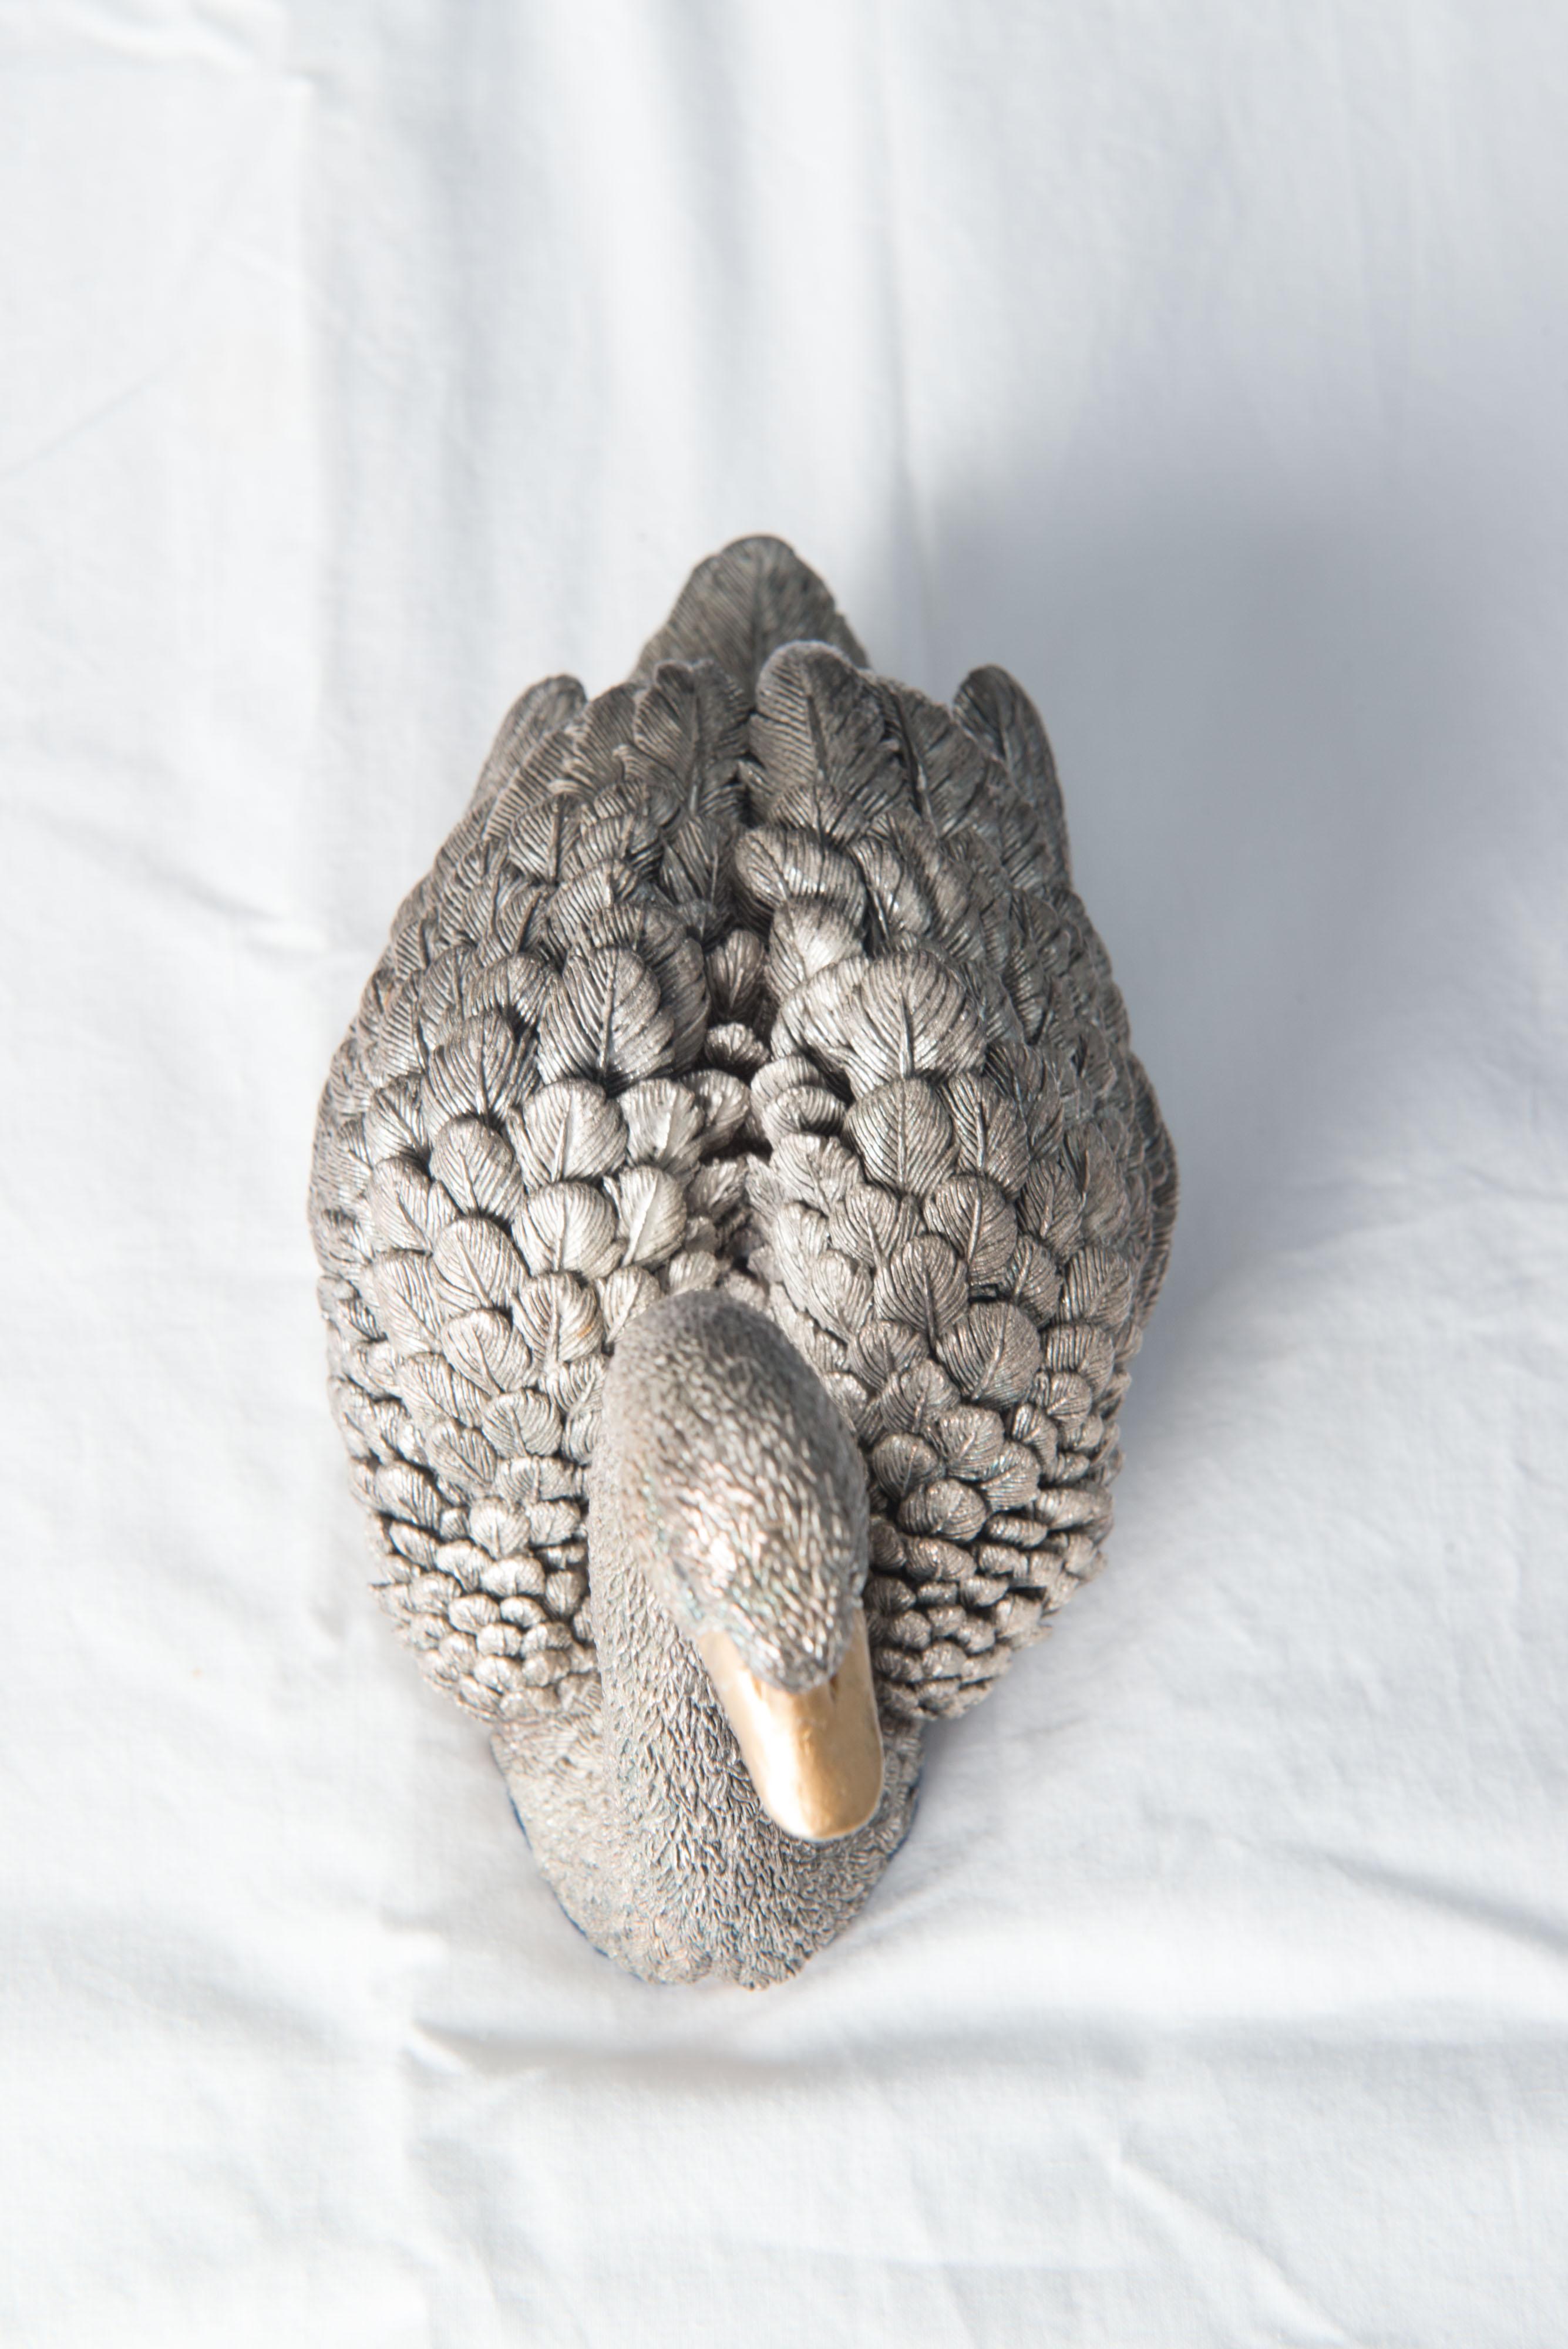 Silver Swan Handmade in England, Buccellati style 6